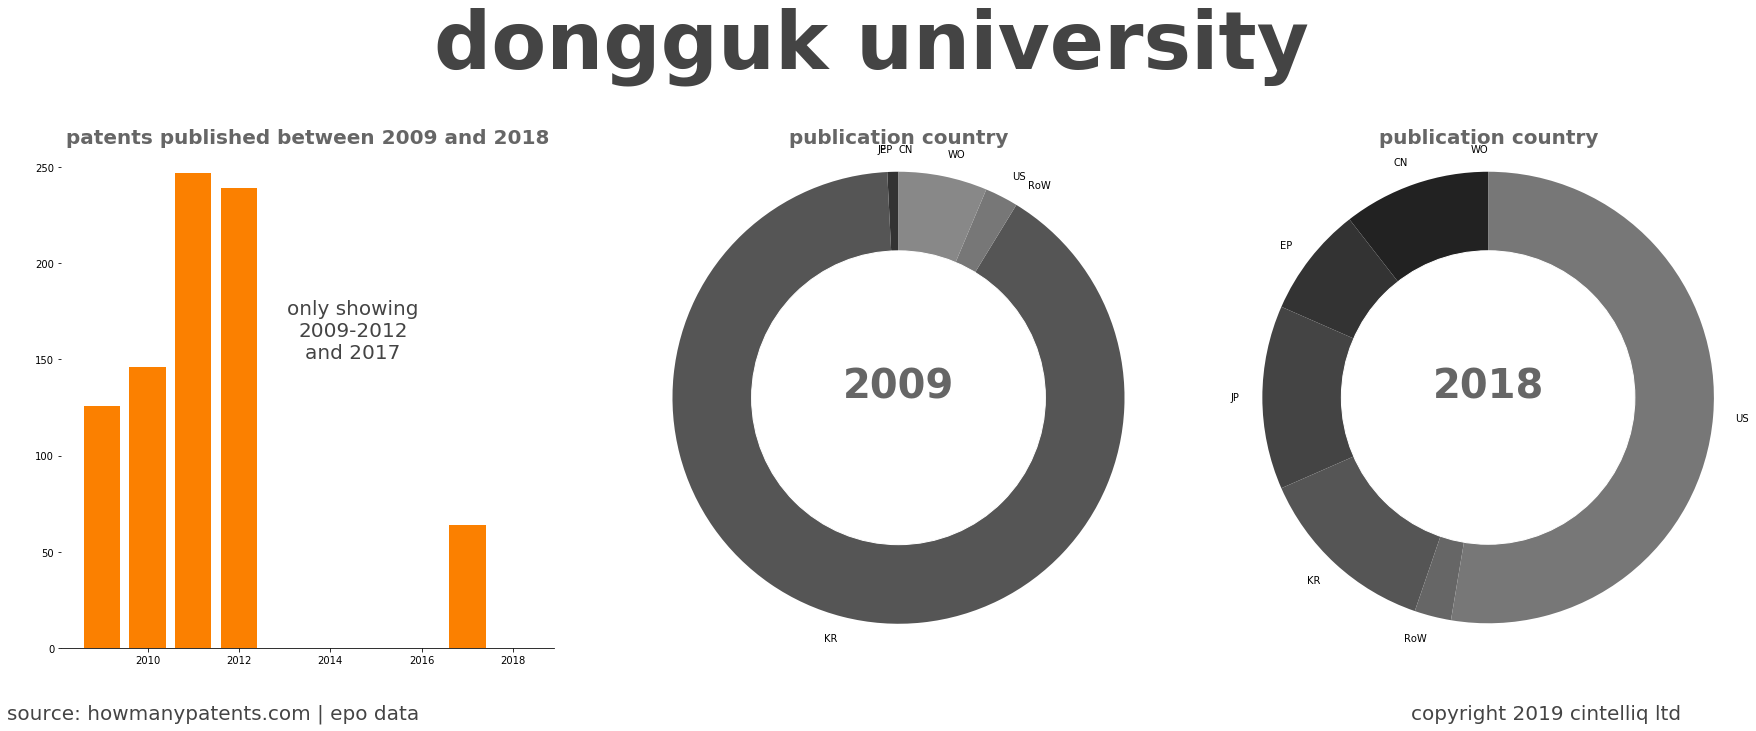 summary of patents for Dongguk University